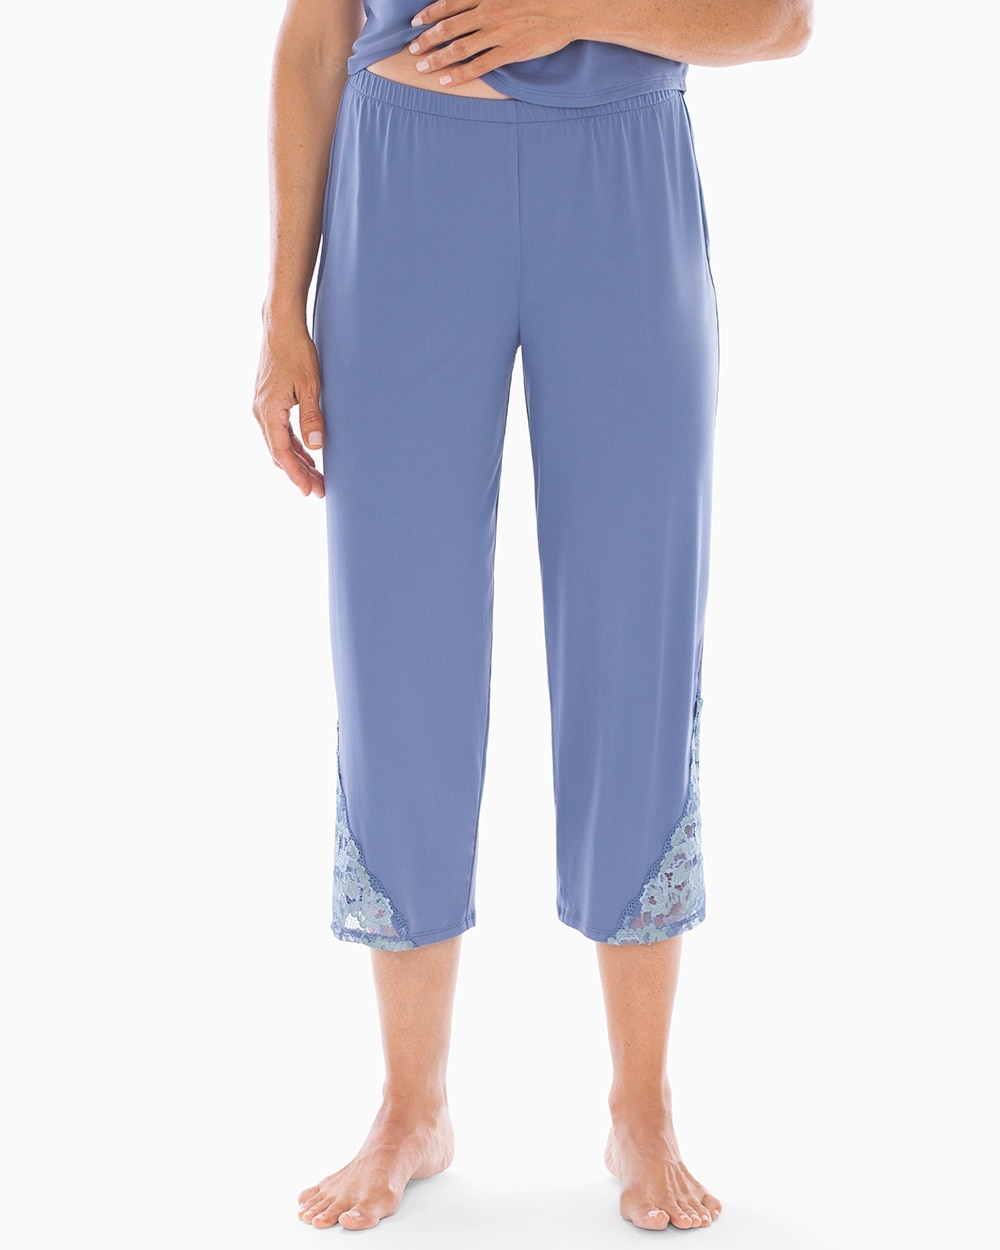 Enbliss Knit Lace Trim Crop Sleep Pants Grecian Blue